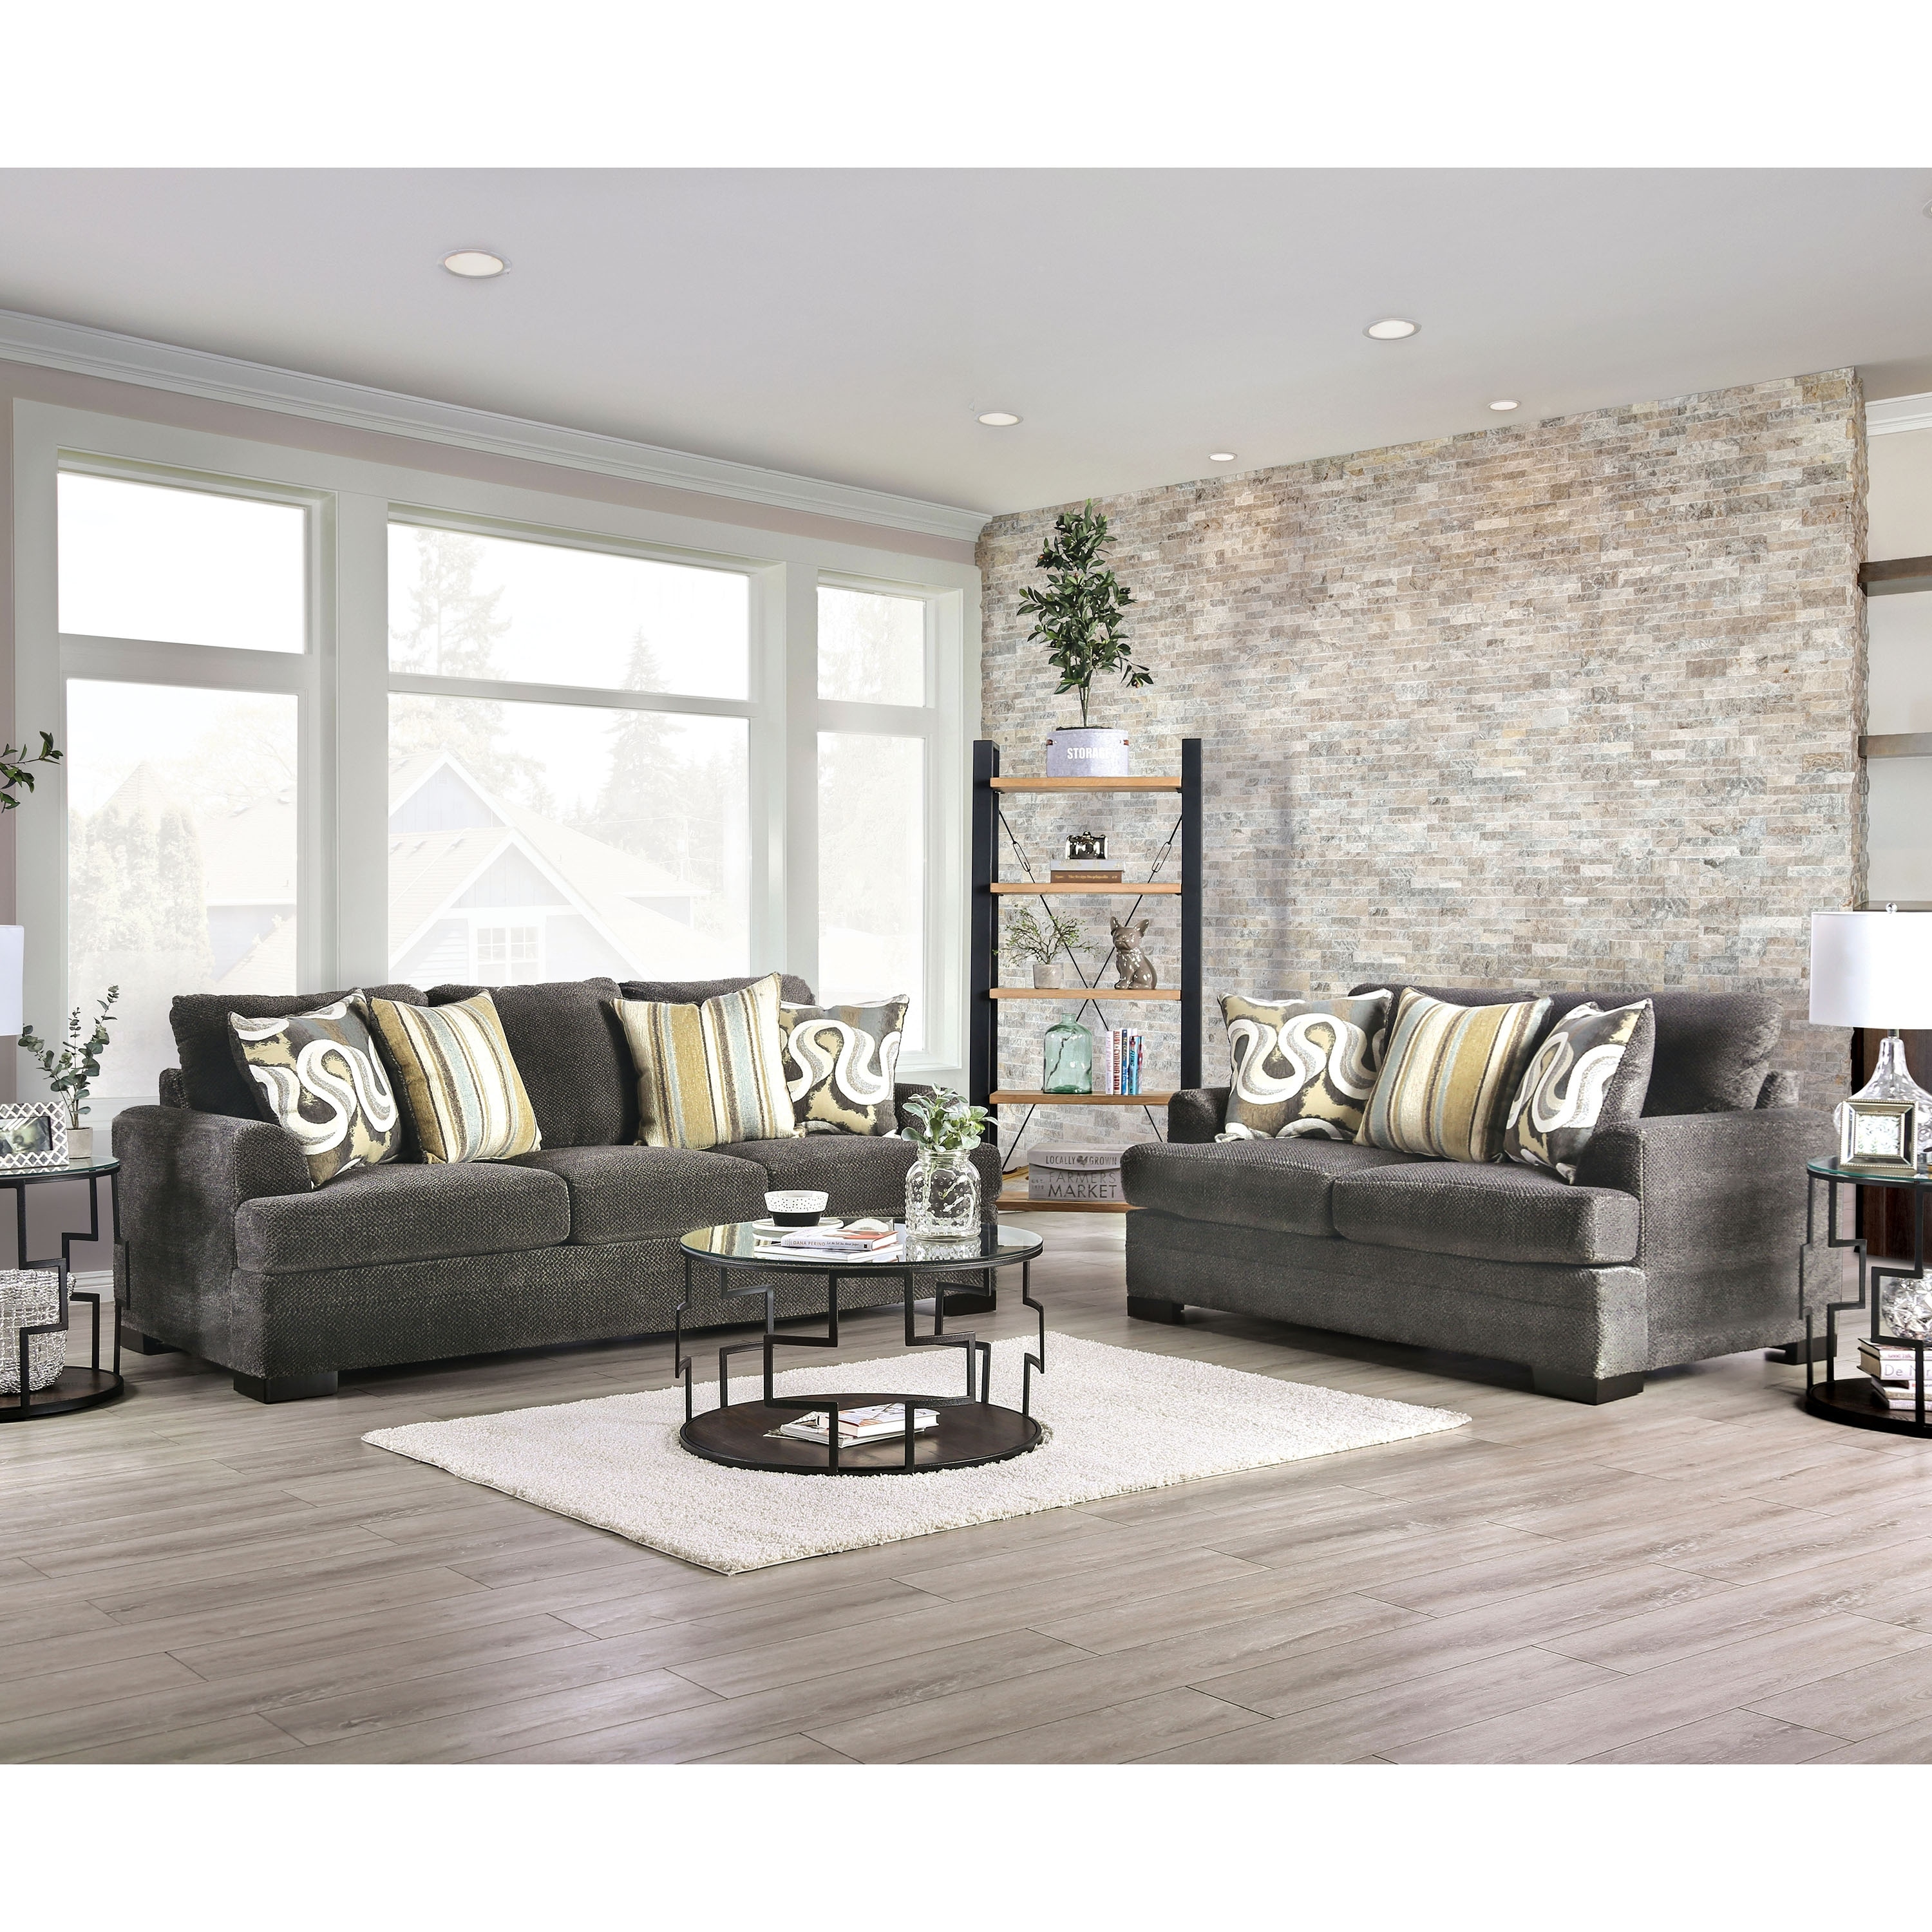 Furniture Of America Klio Transitional Chenille 2 Piece Living Room Set 